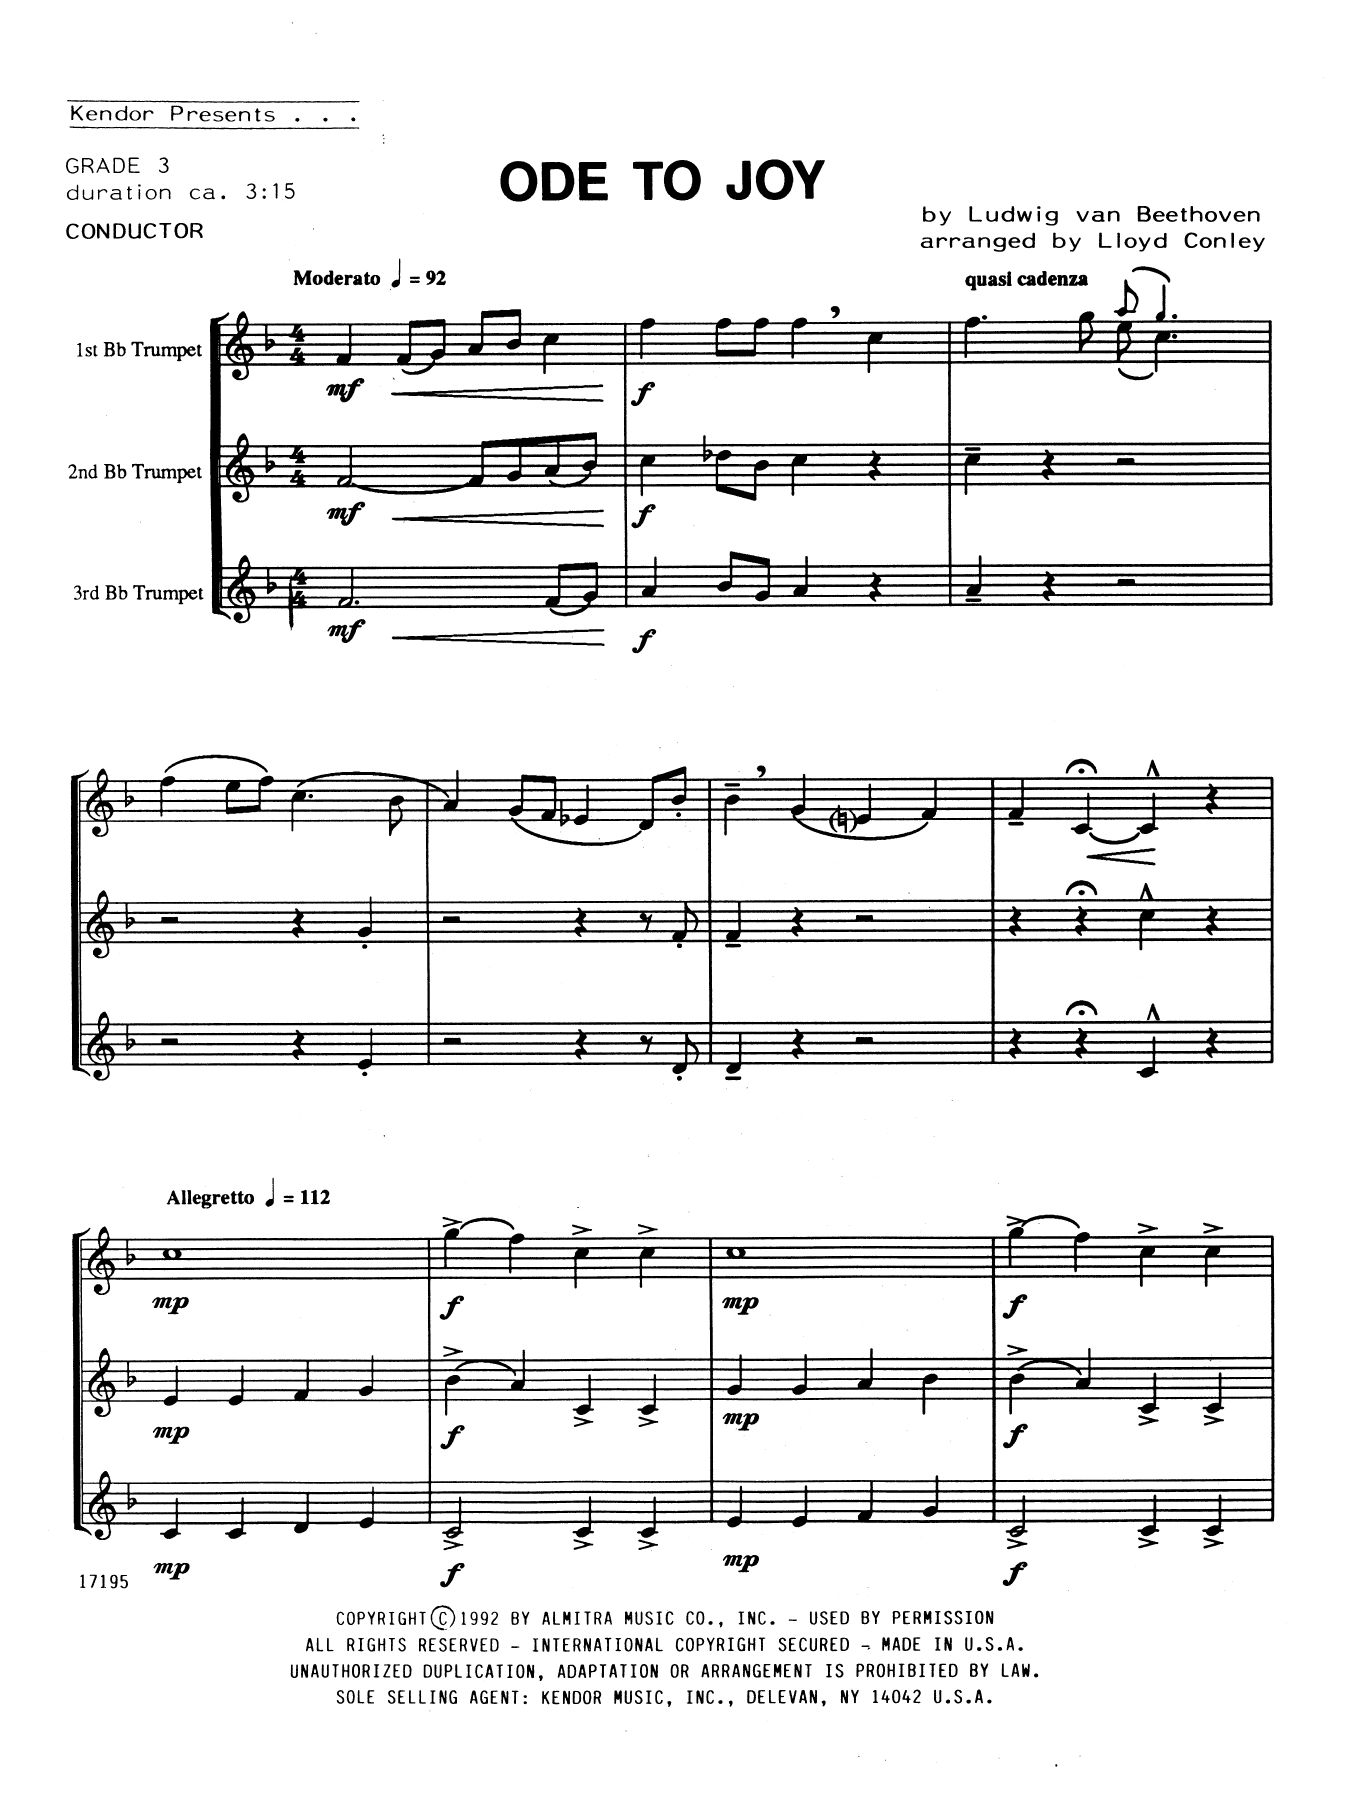 Download Lloyd Conley Ode To Joy - Full Score Sheet Music